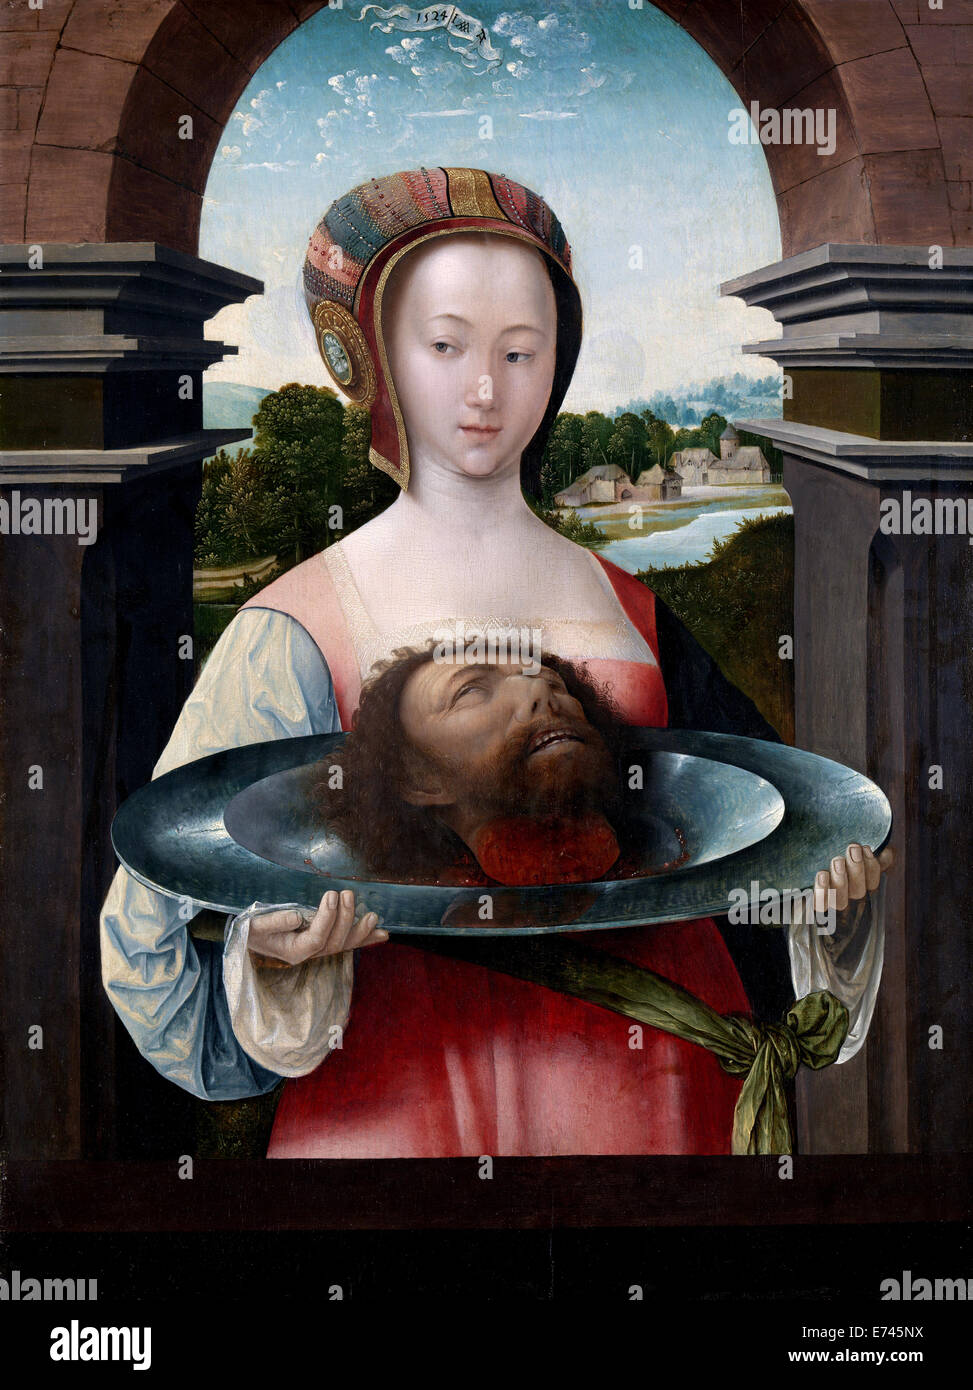 Salome with the Head of John the Baptist - by Jacob Cornelisz van Oostsanen, 1524 Stock Photo